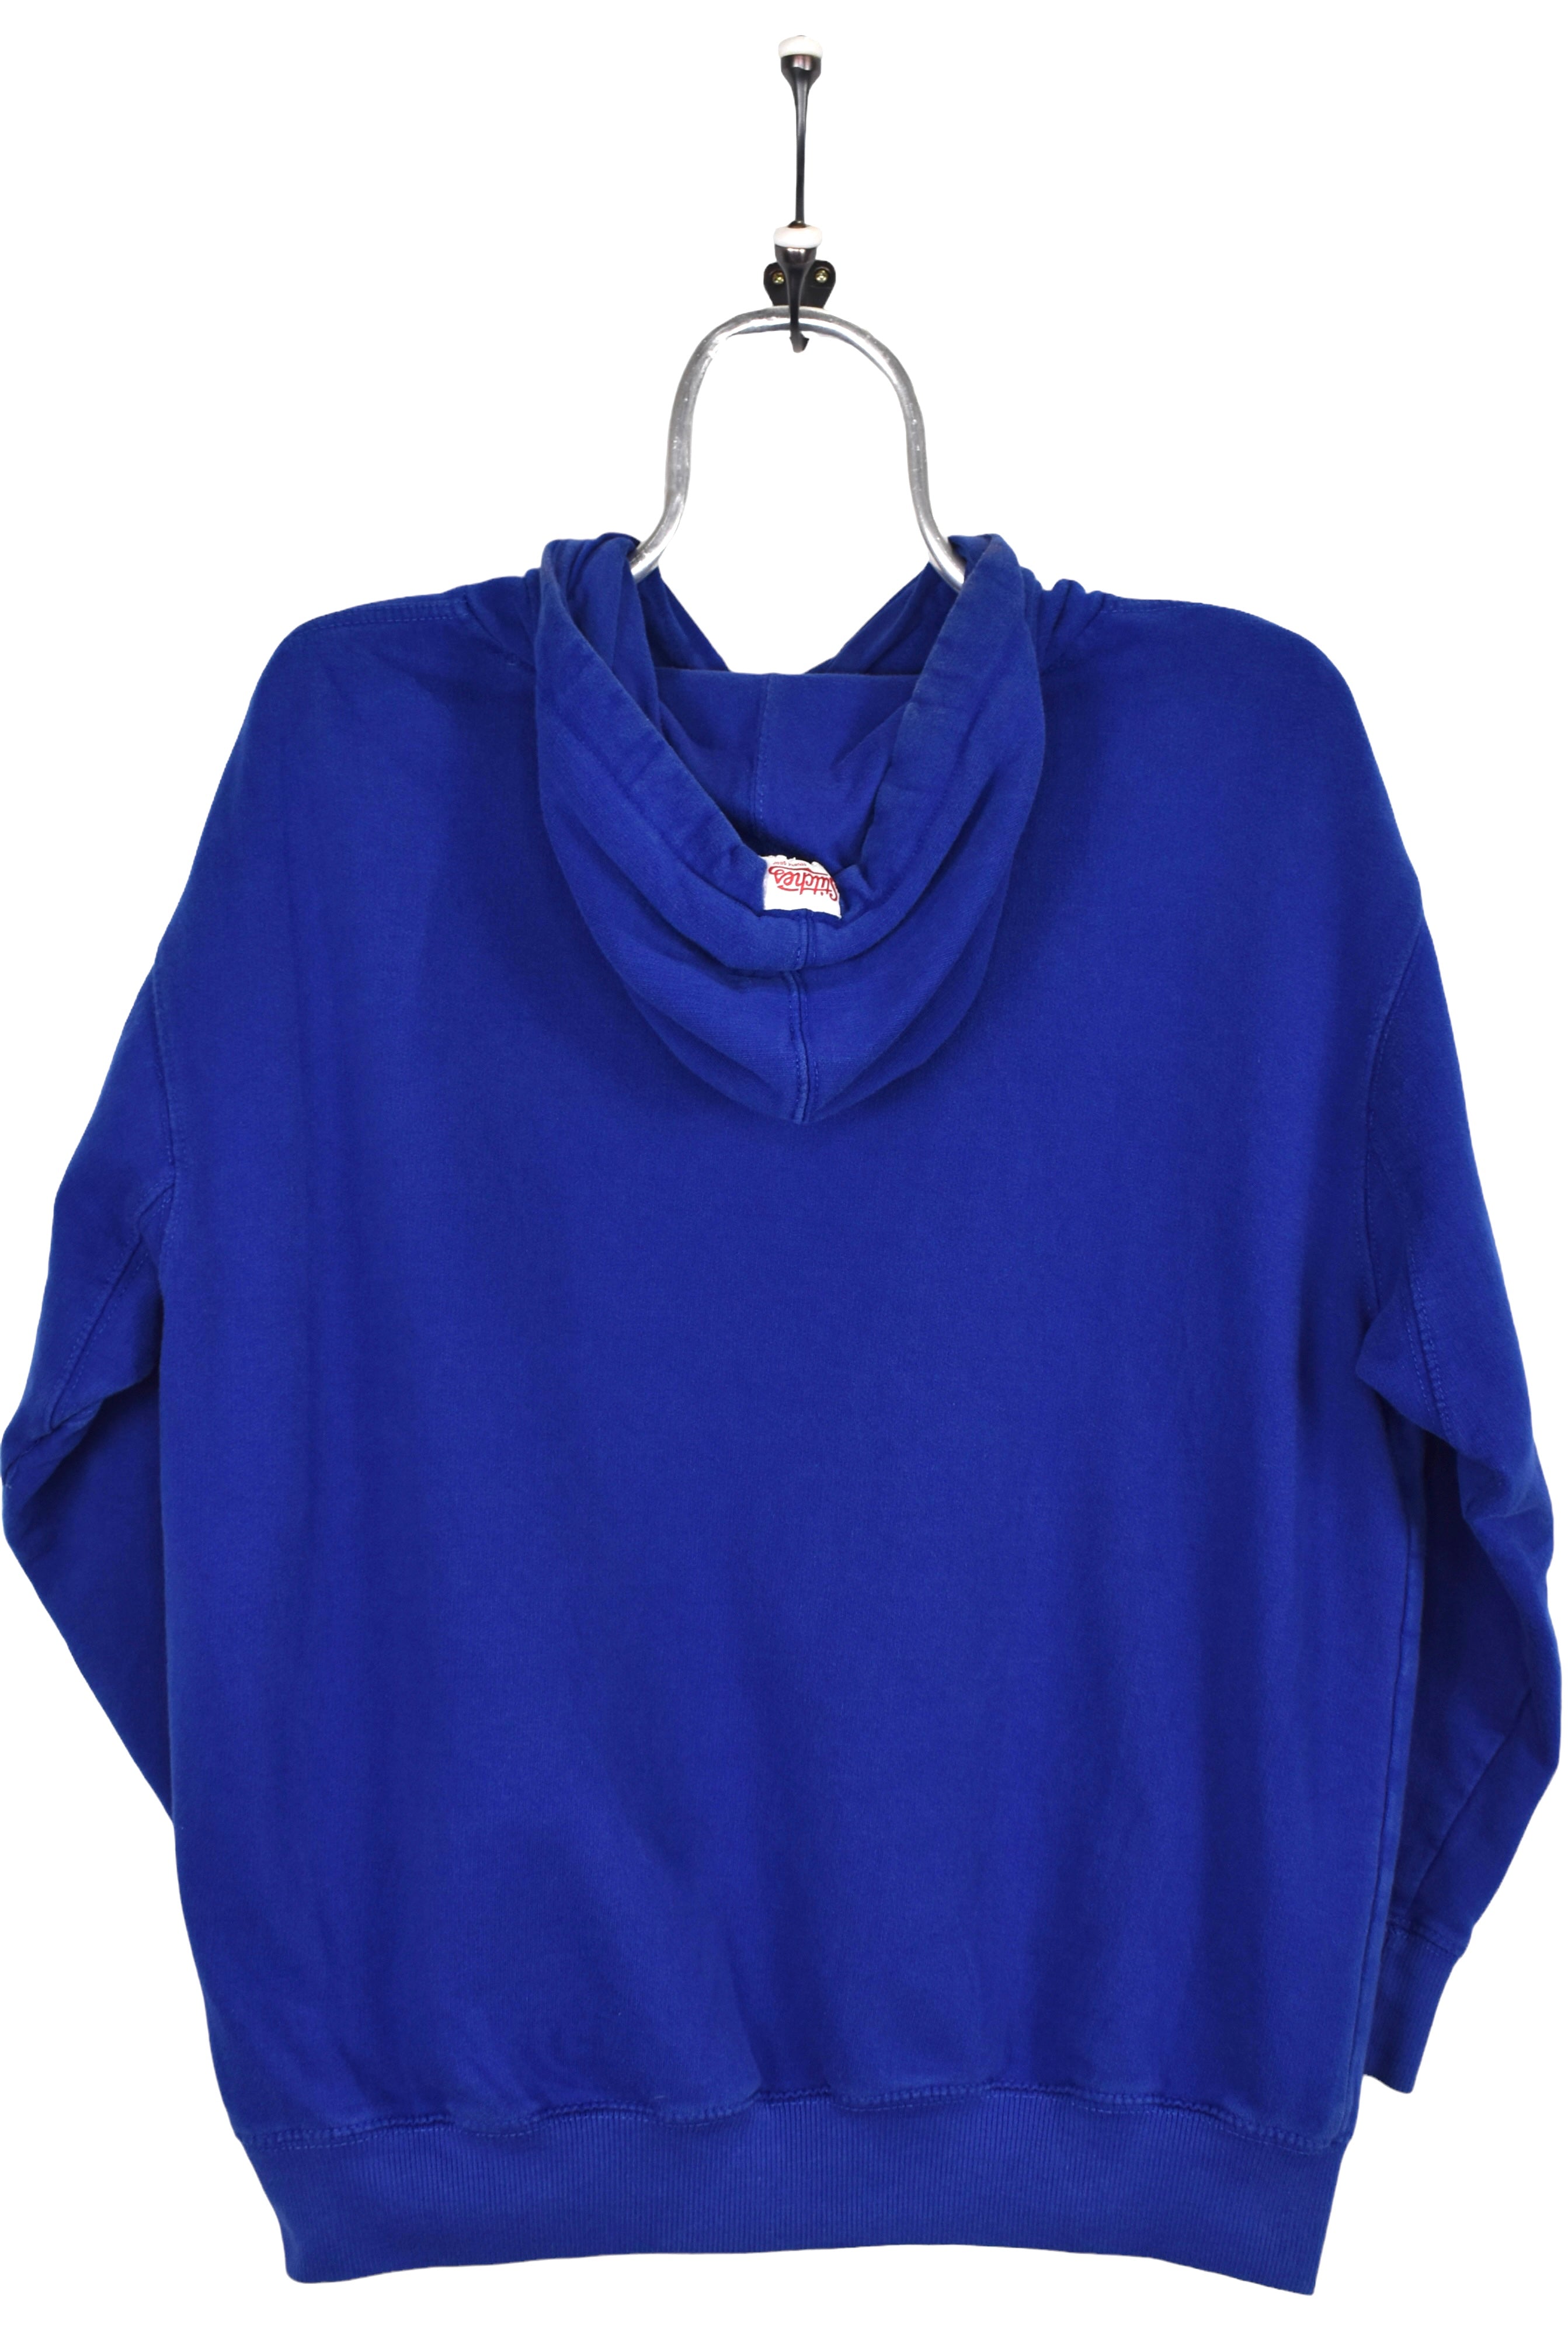 Vintage New York Mets hoodie, blue MLB embroidered sweatshirt - Medium